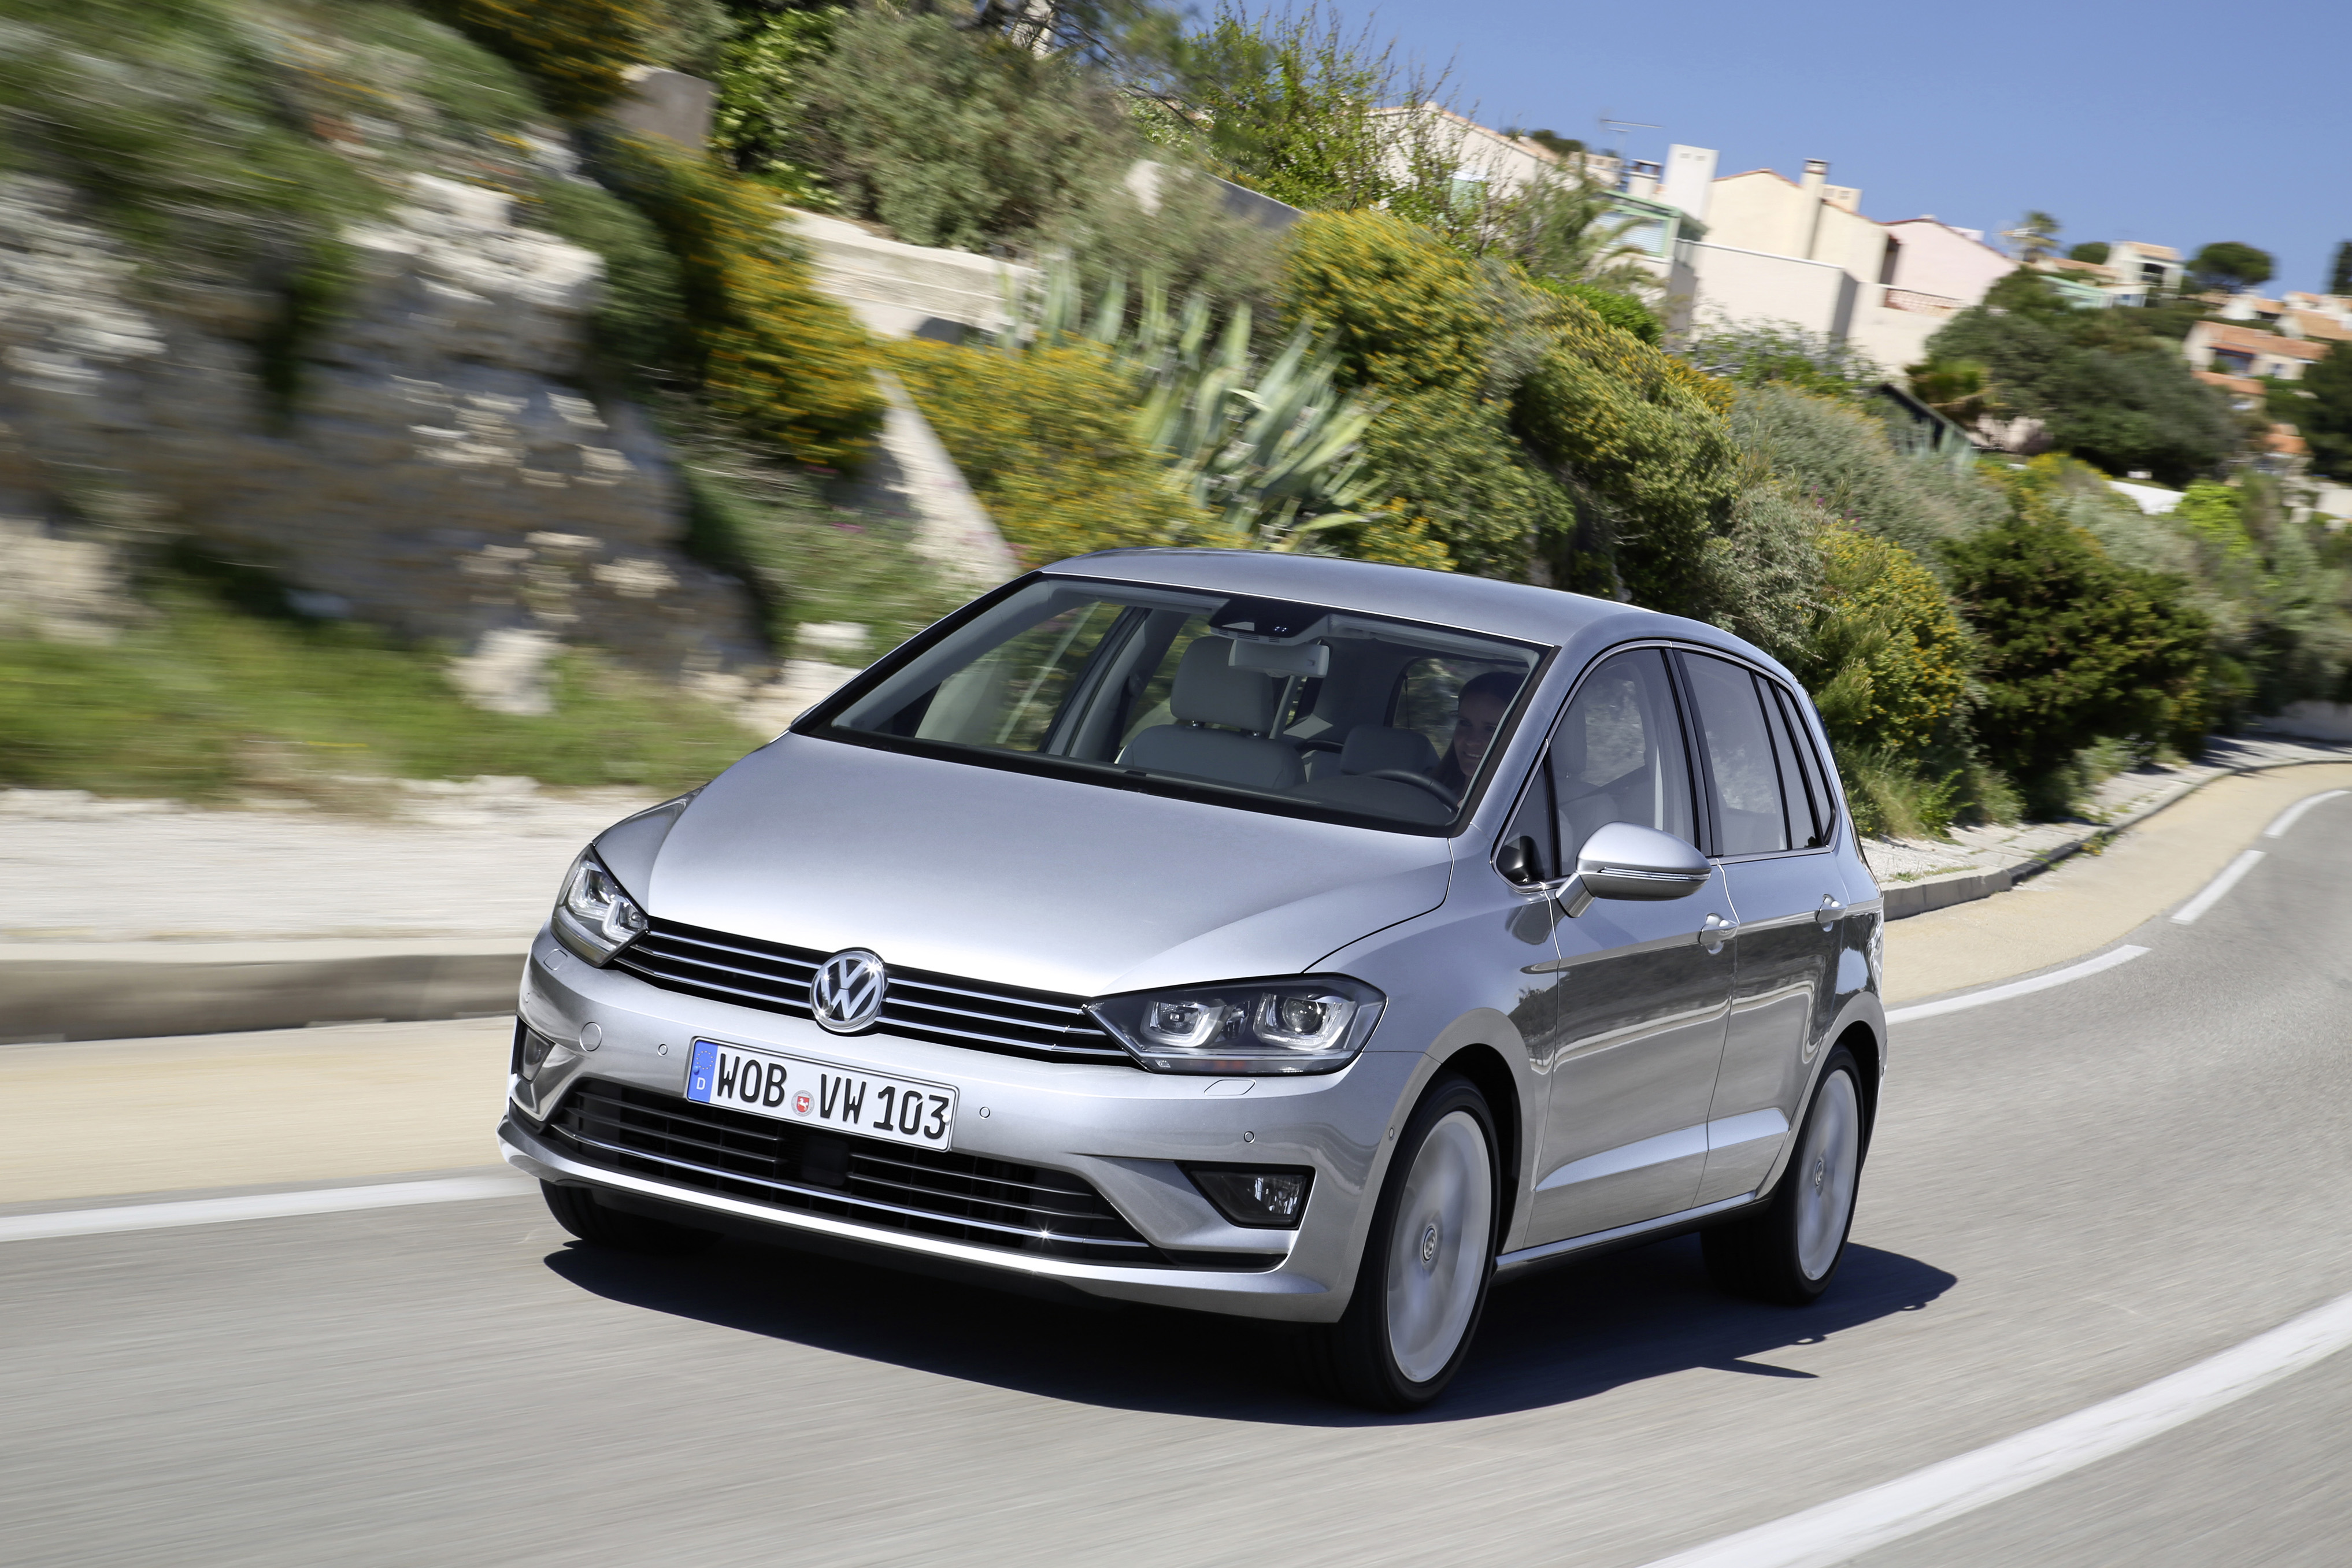 Volkswagen Golf Sportsvan production car unveiled!